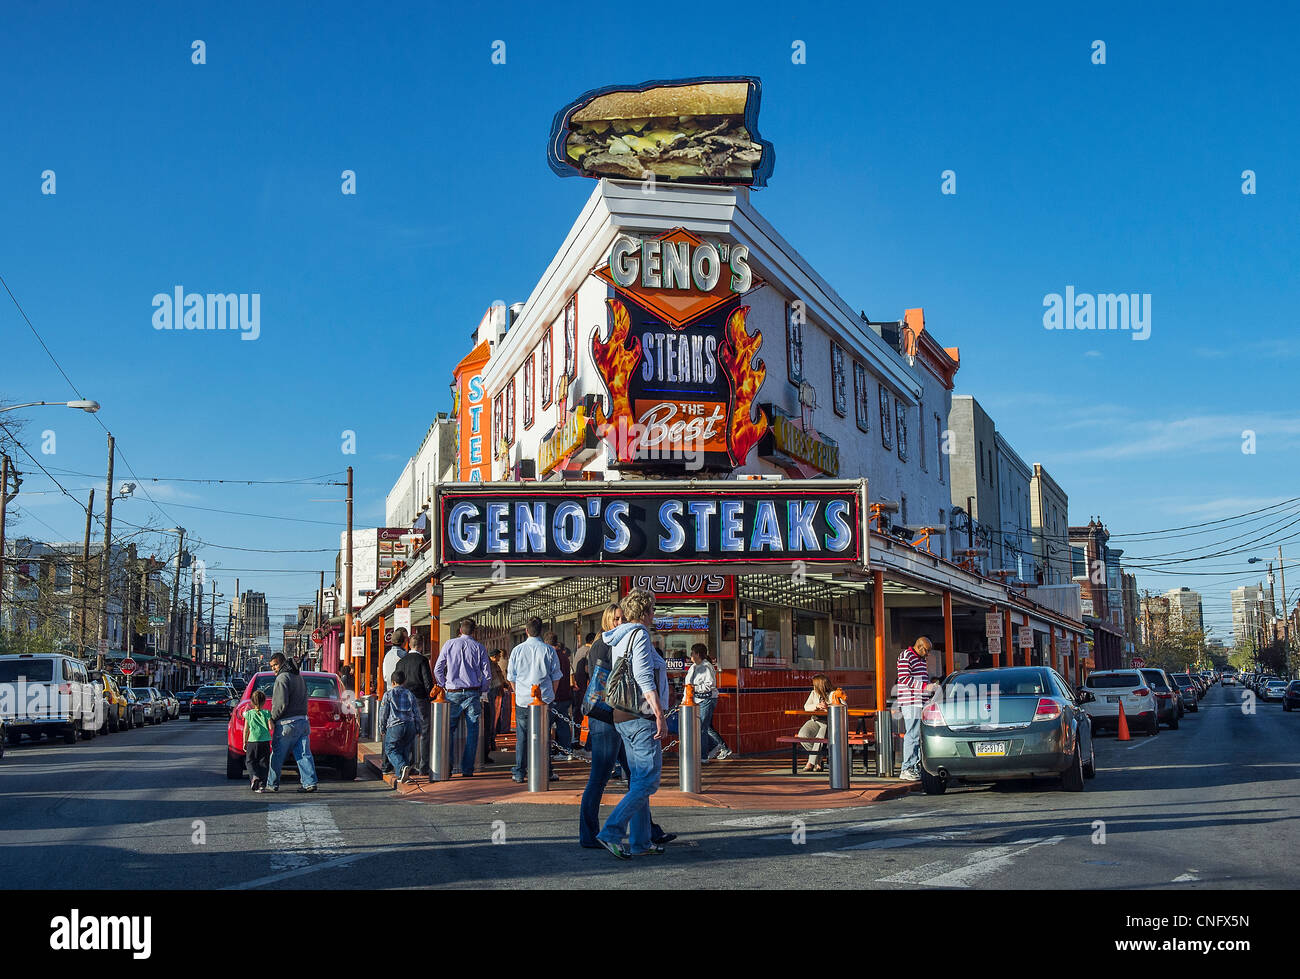 Geno's célèbres steaks, South Philly, Philadelphie, USA Banque D'Images